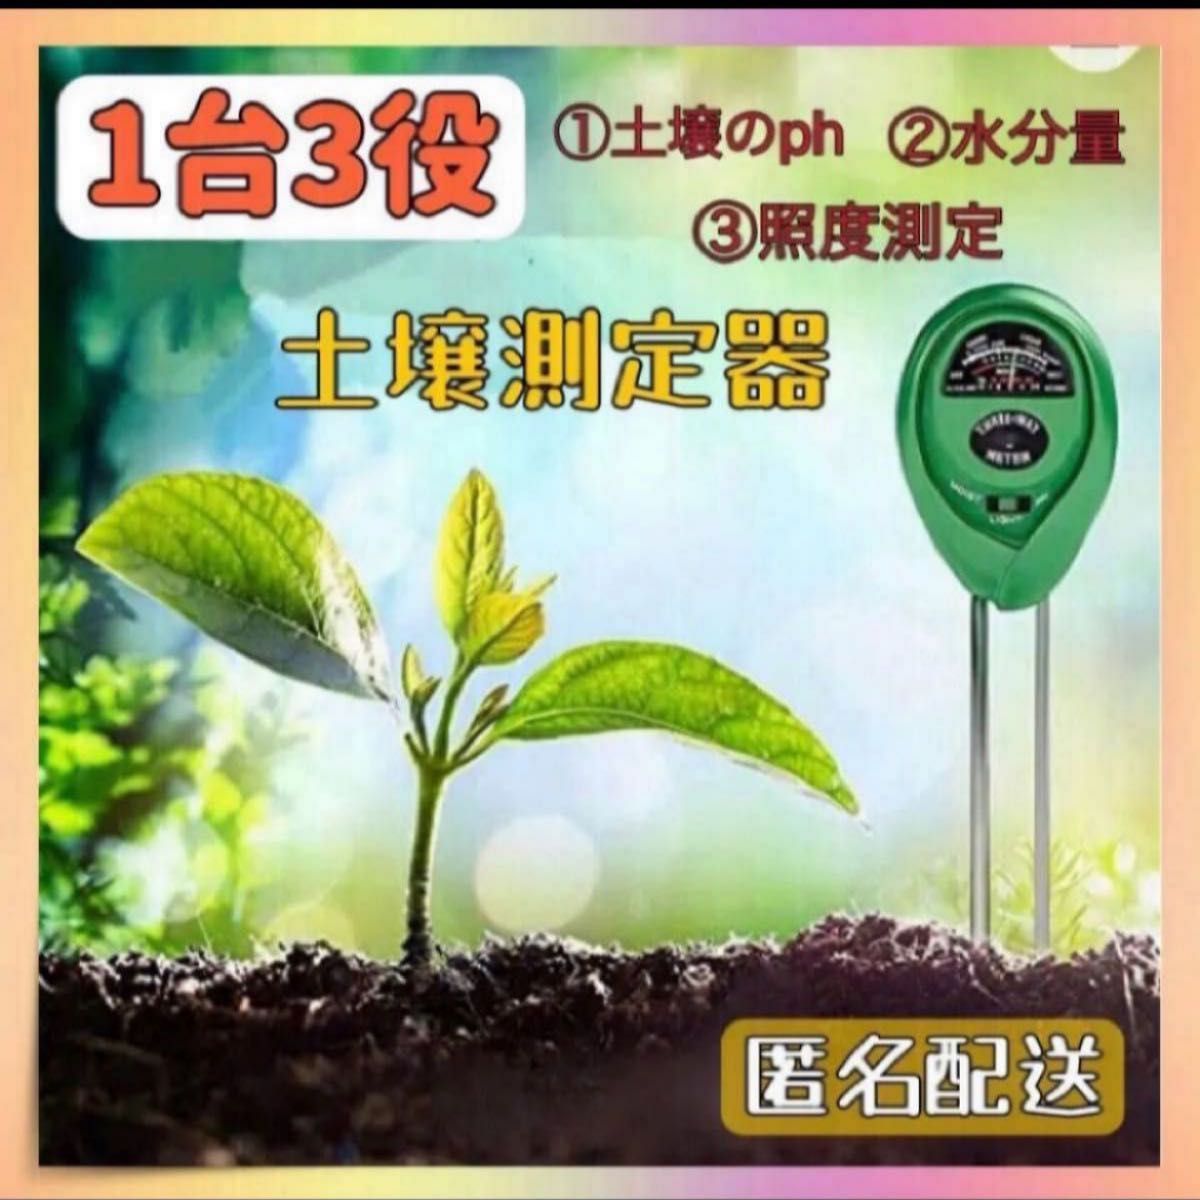 xuuyuu 土壌テスター 土壌測定器 ph測定器 土壌酸度計 土壌pHメーター 土壌酸度 土壌測定メーター 高精確度 使用簡単 ガーデニング 農業